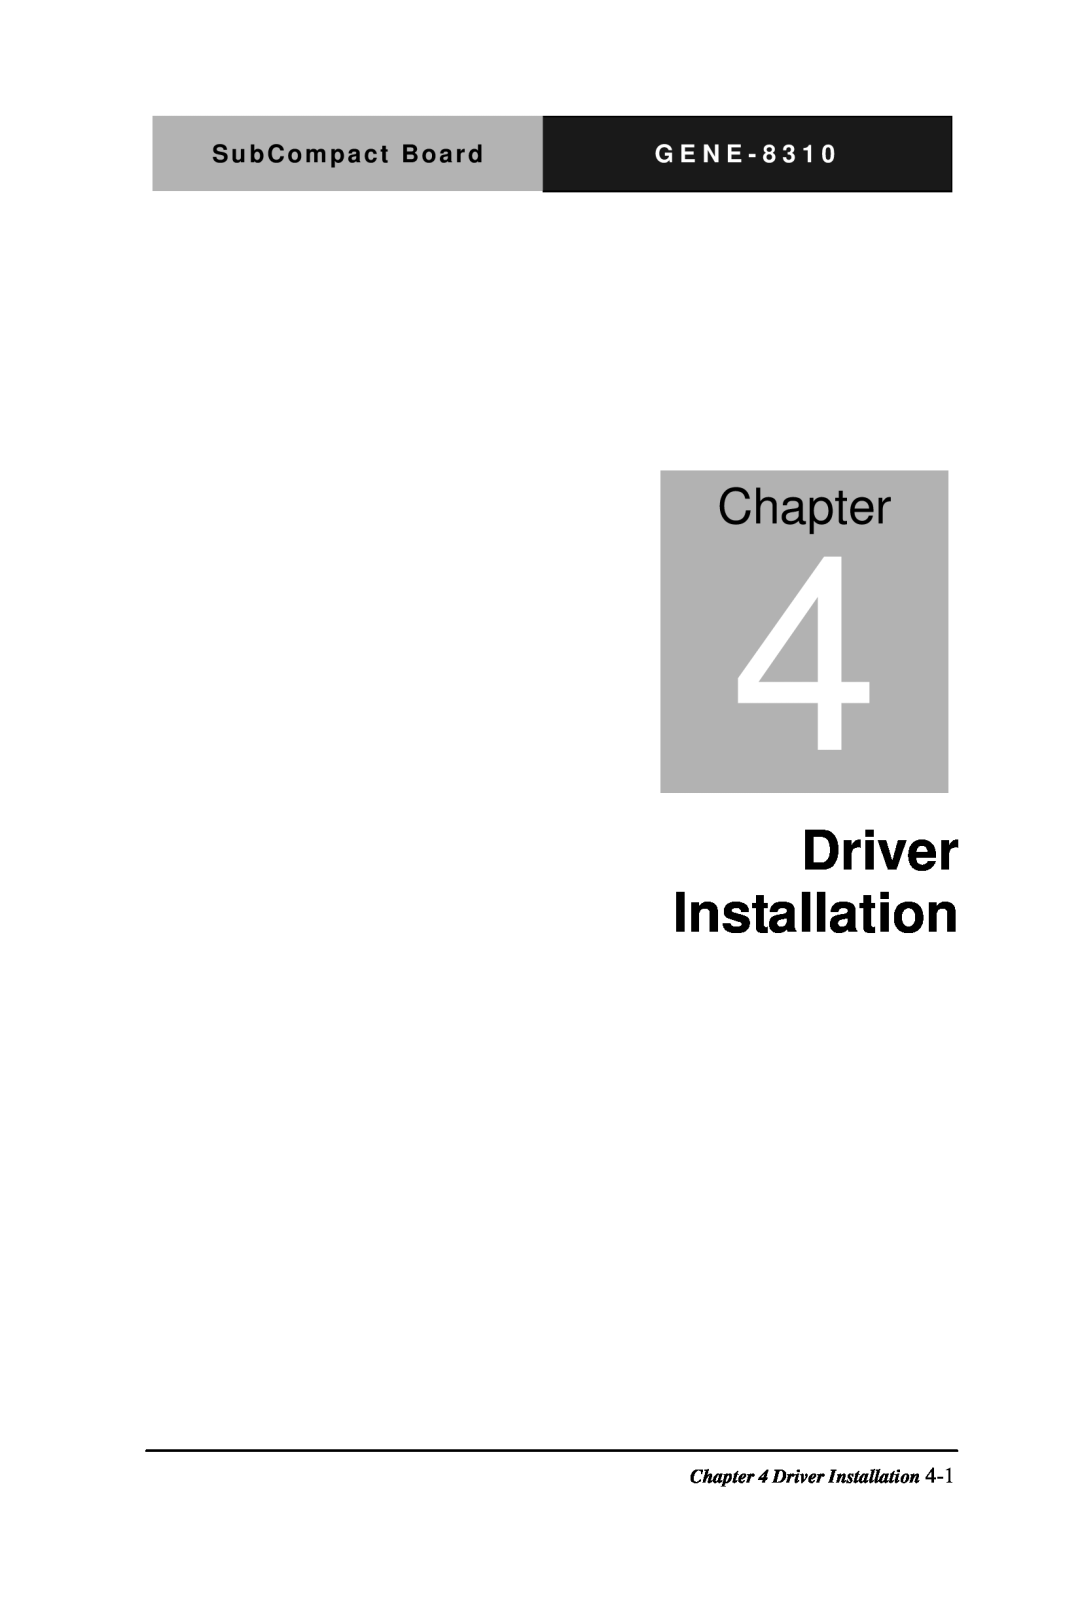 Intel GENE-8310 manual Driver Installation, Chapter, SubCompact Board, G E N E - 8 3 1 